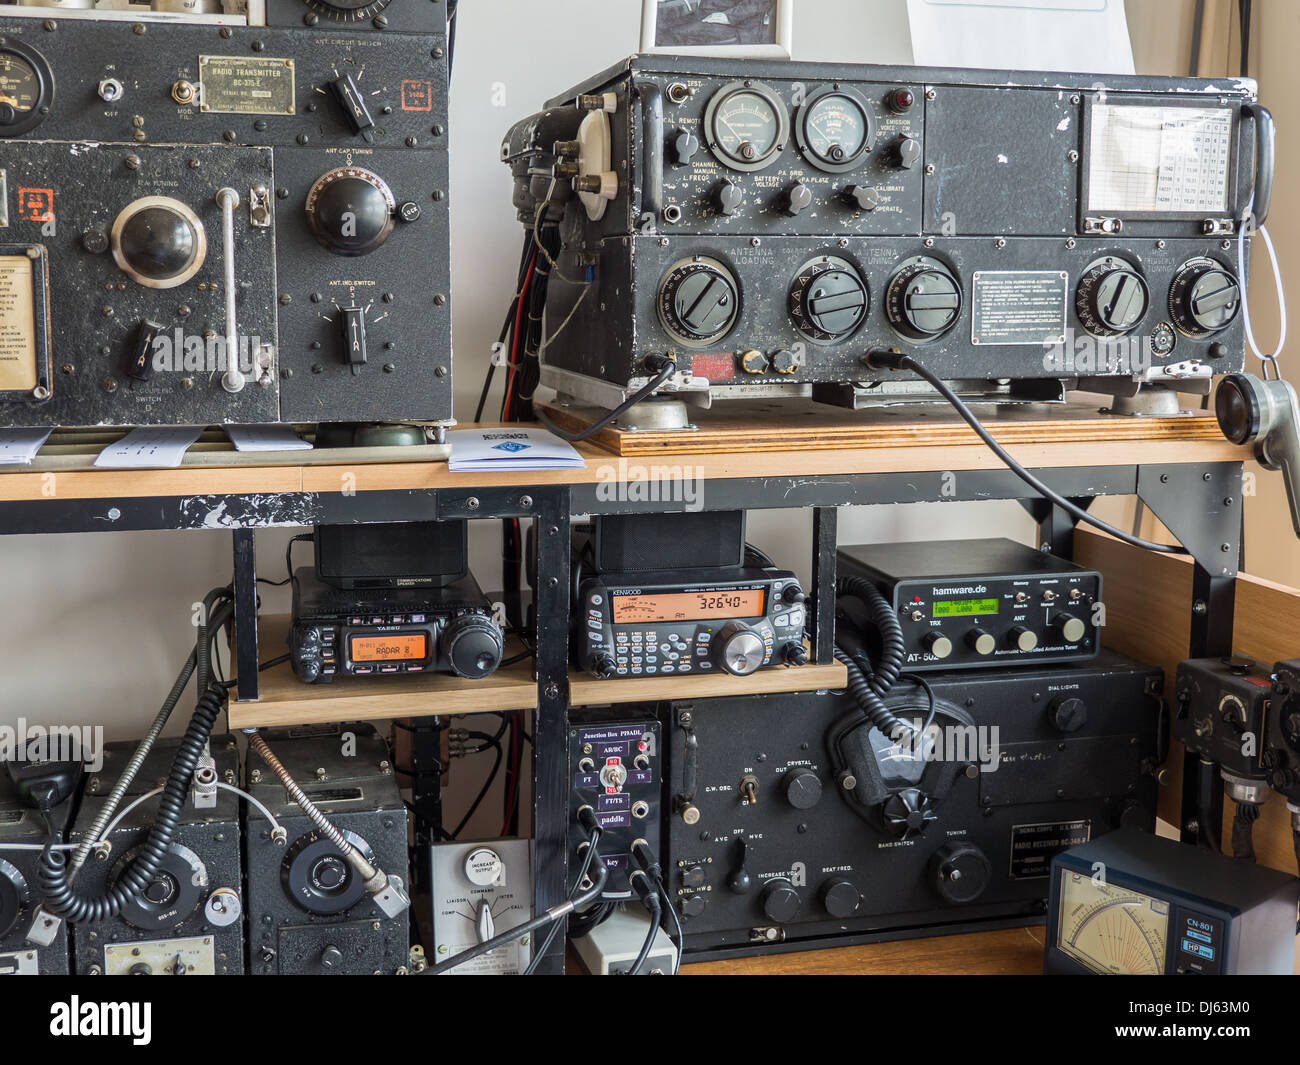 https://c8.alamy.com/comp/DJ63M0/vintage-radio-transmitter-units-on-display-in-the-permanent-exhibition-DJ63M0.jpg